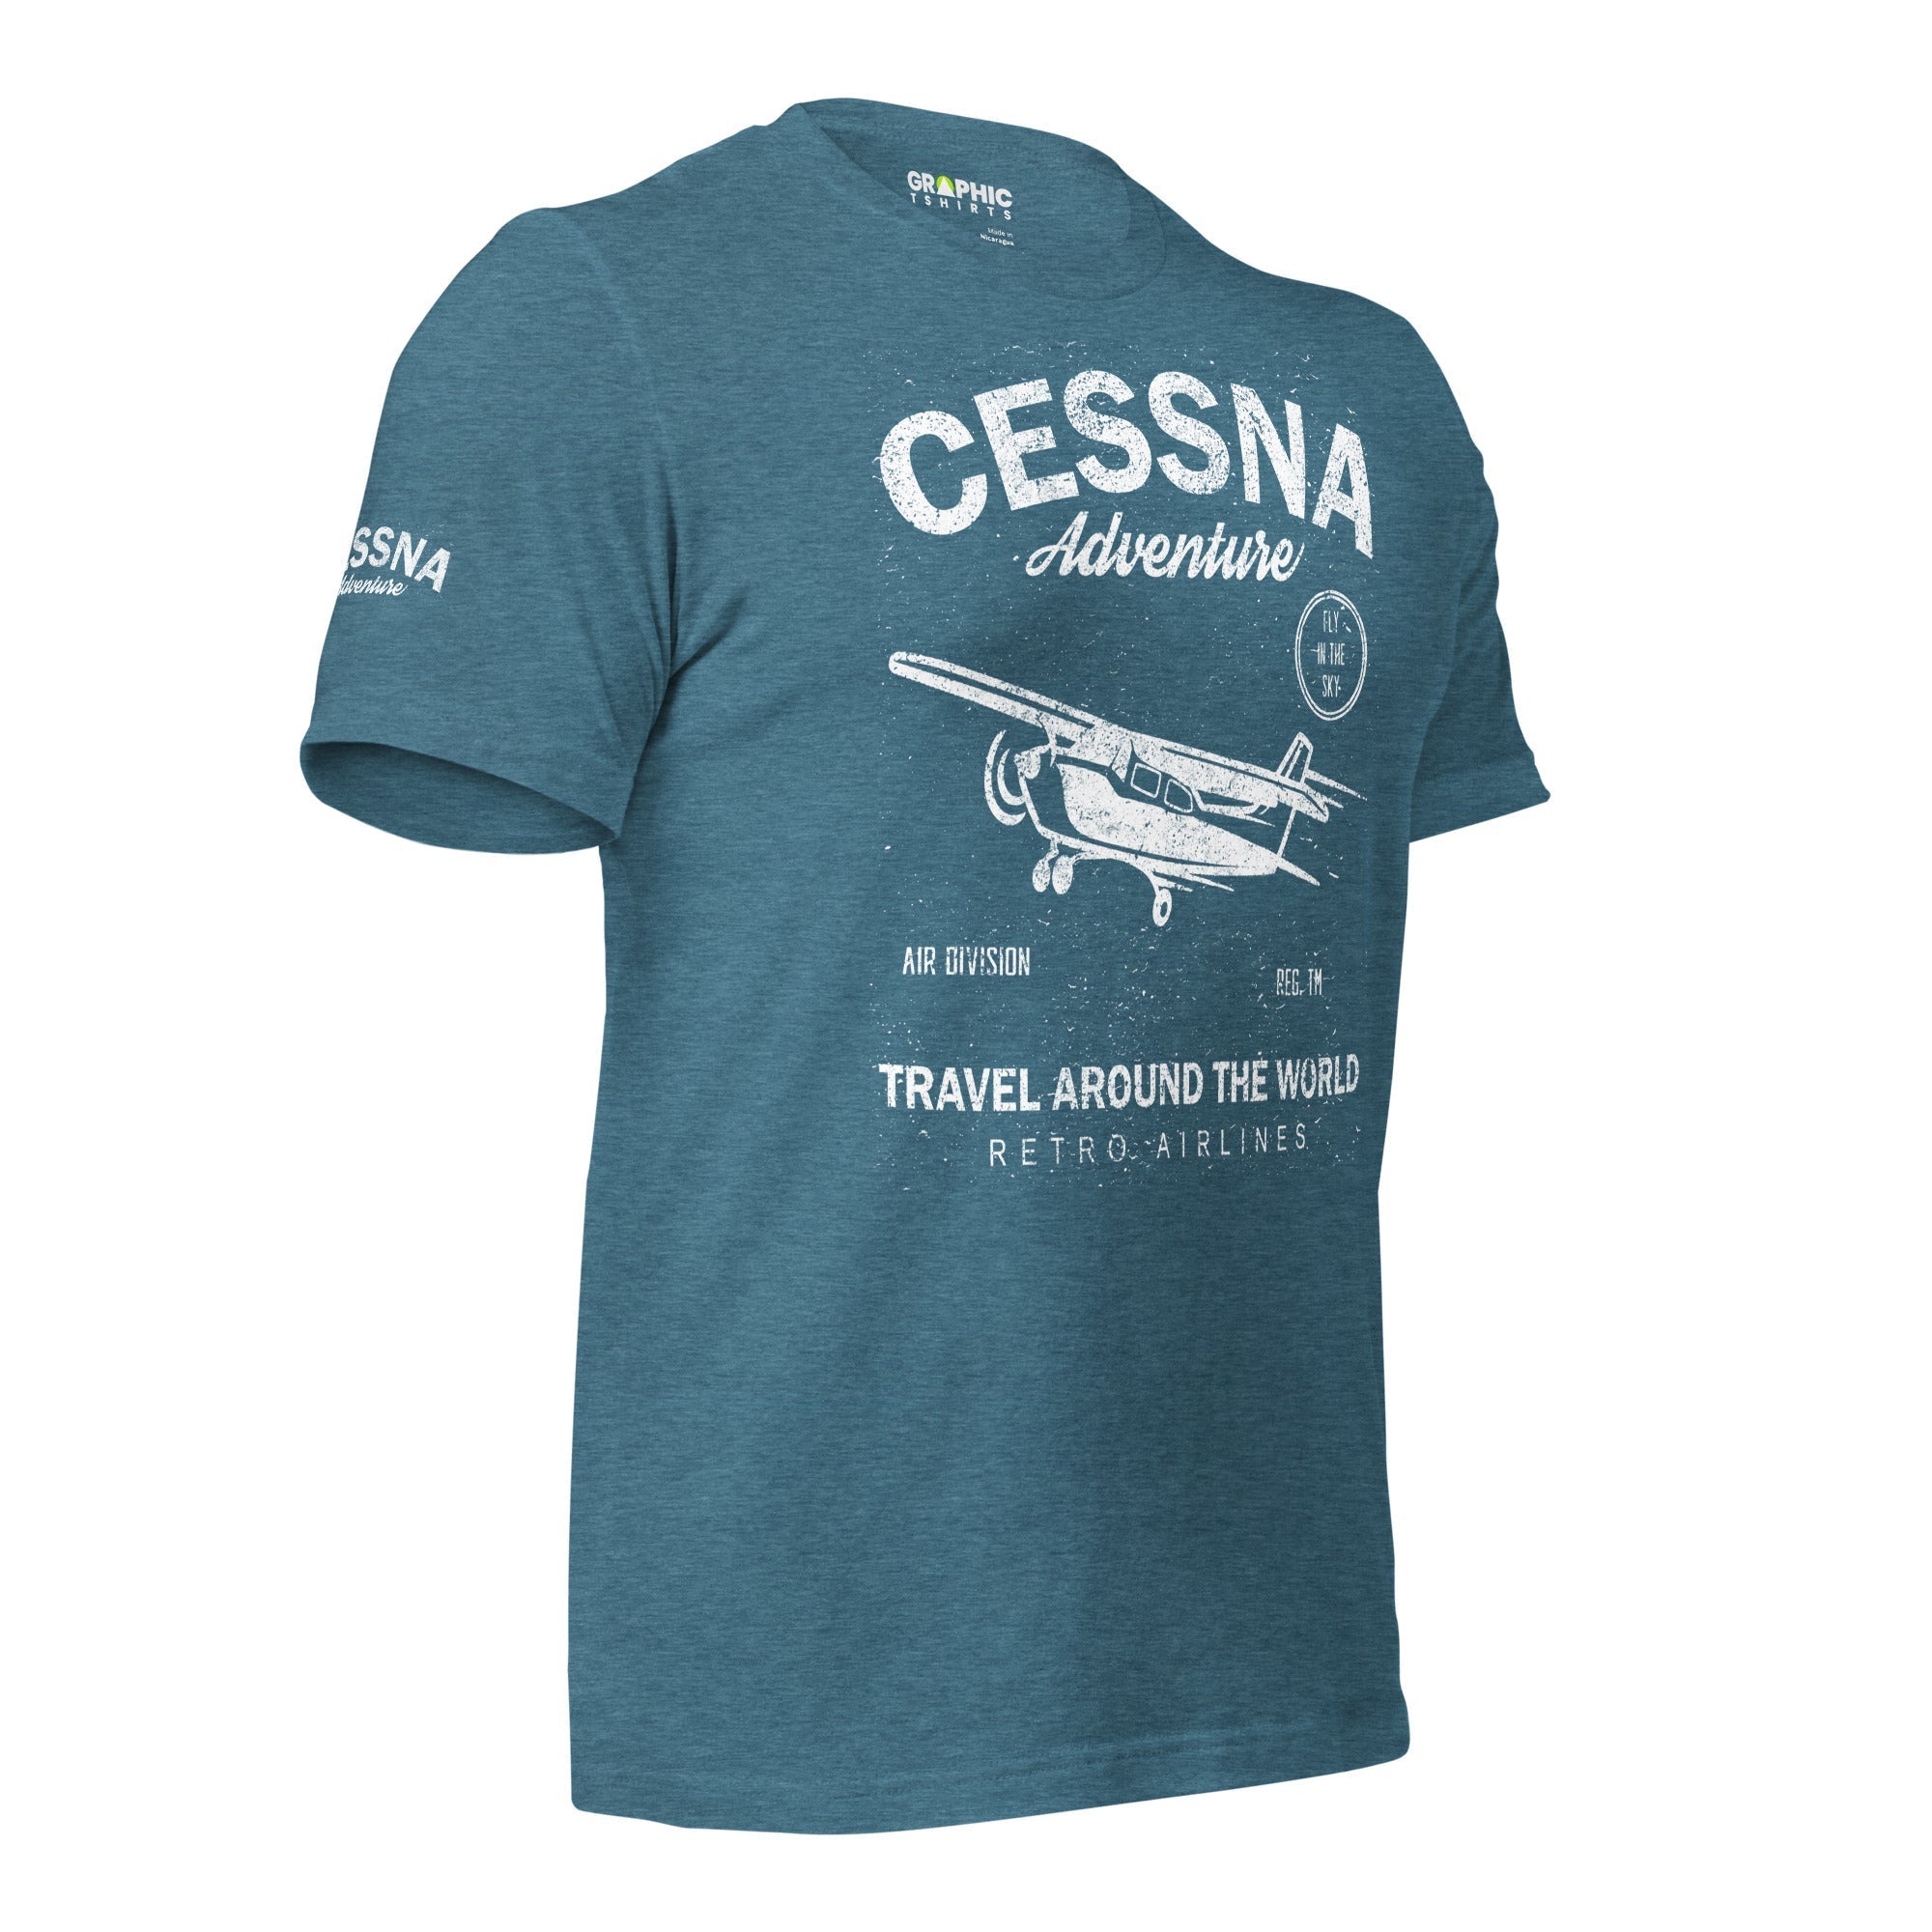 Unisex Staple T-Shirt - Cessna Adventure Travel Around The World Retro Airlines - GRAPHIC T-SHIRTS